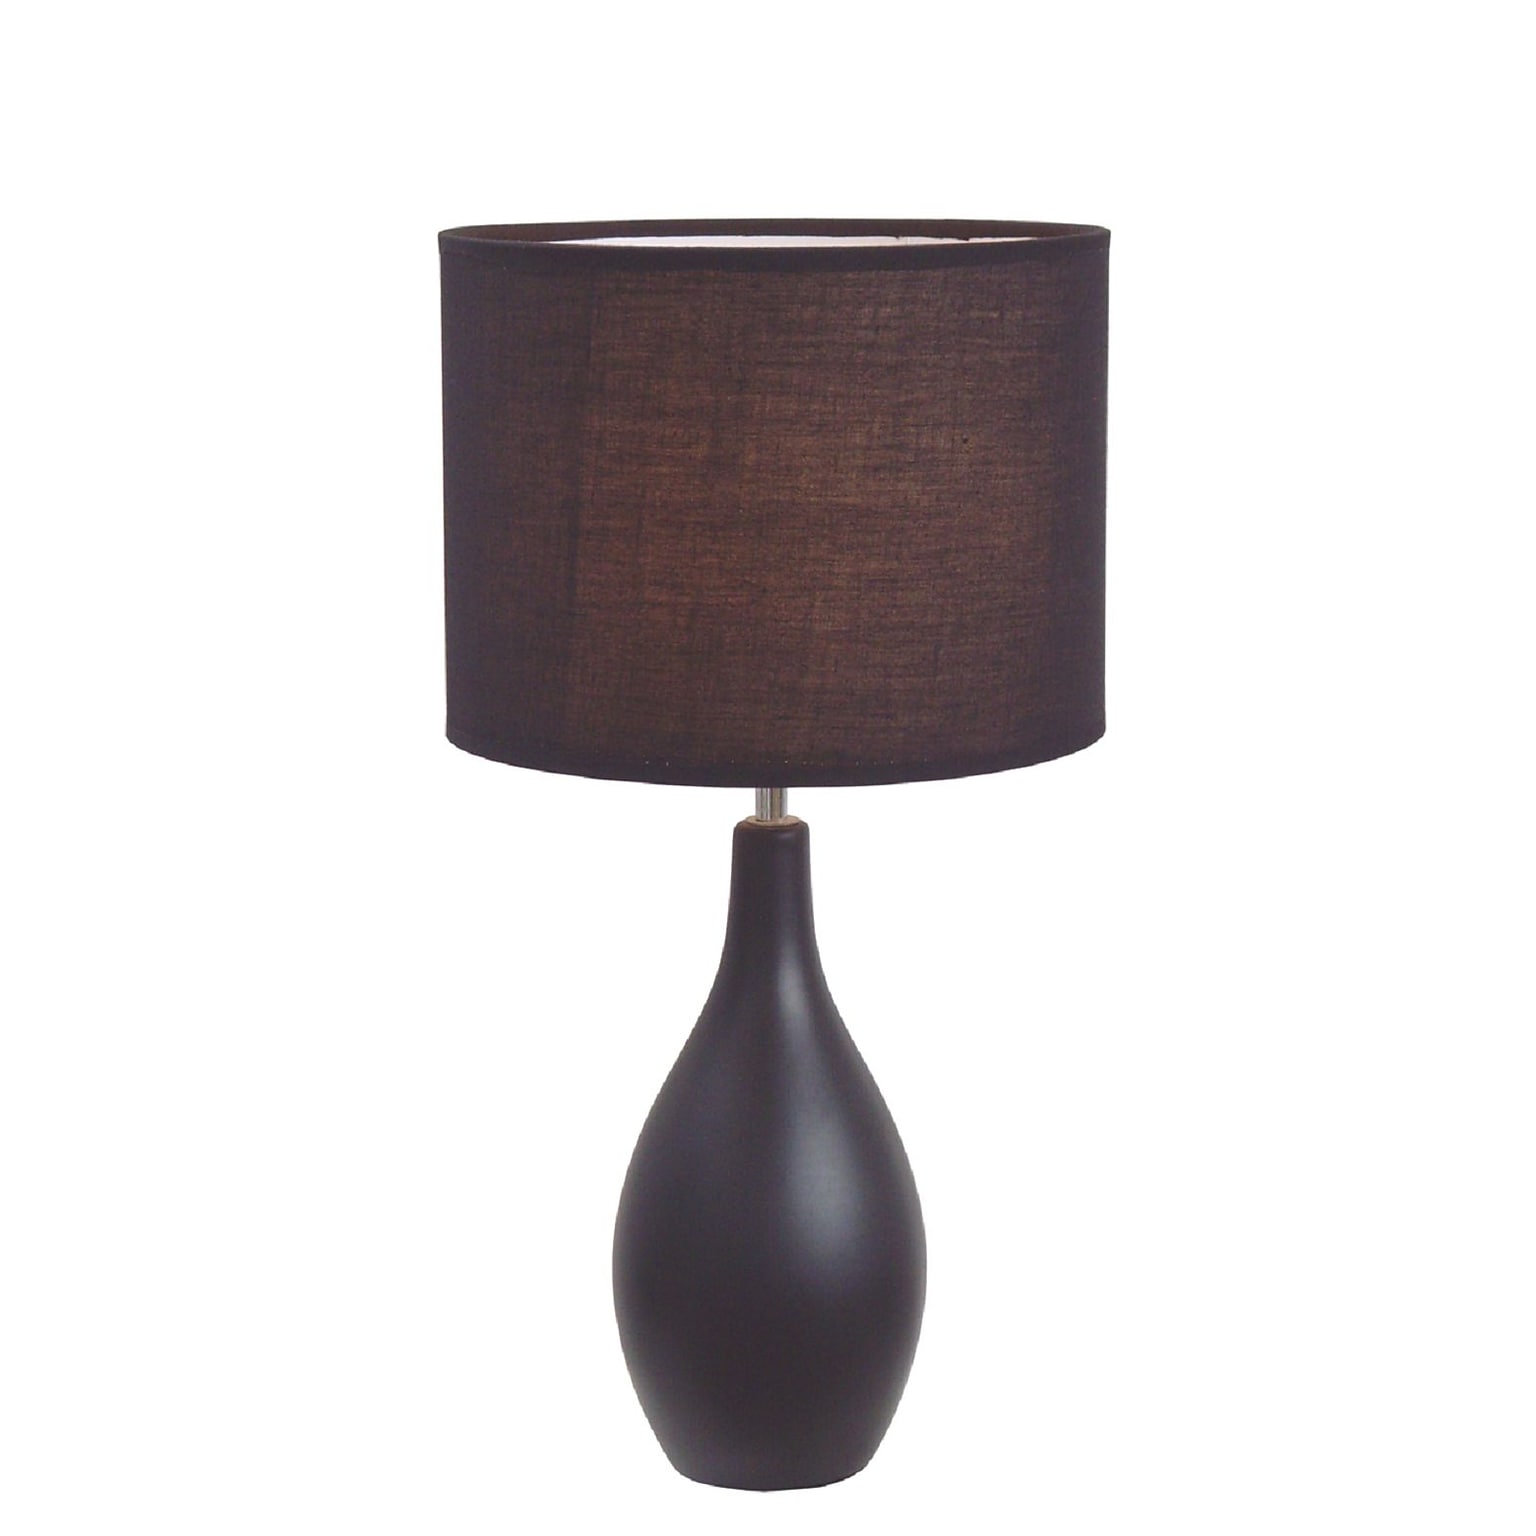 Simple Designs Oval Base Ceramic Table Lamp, Black Finish